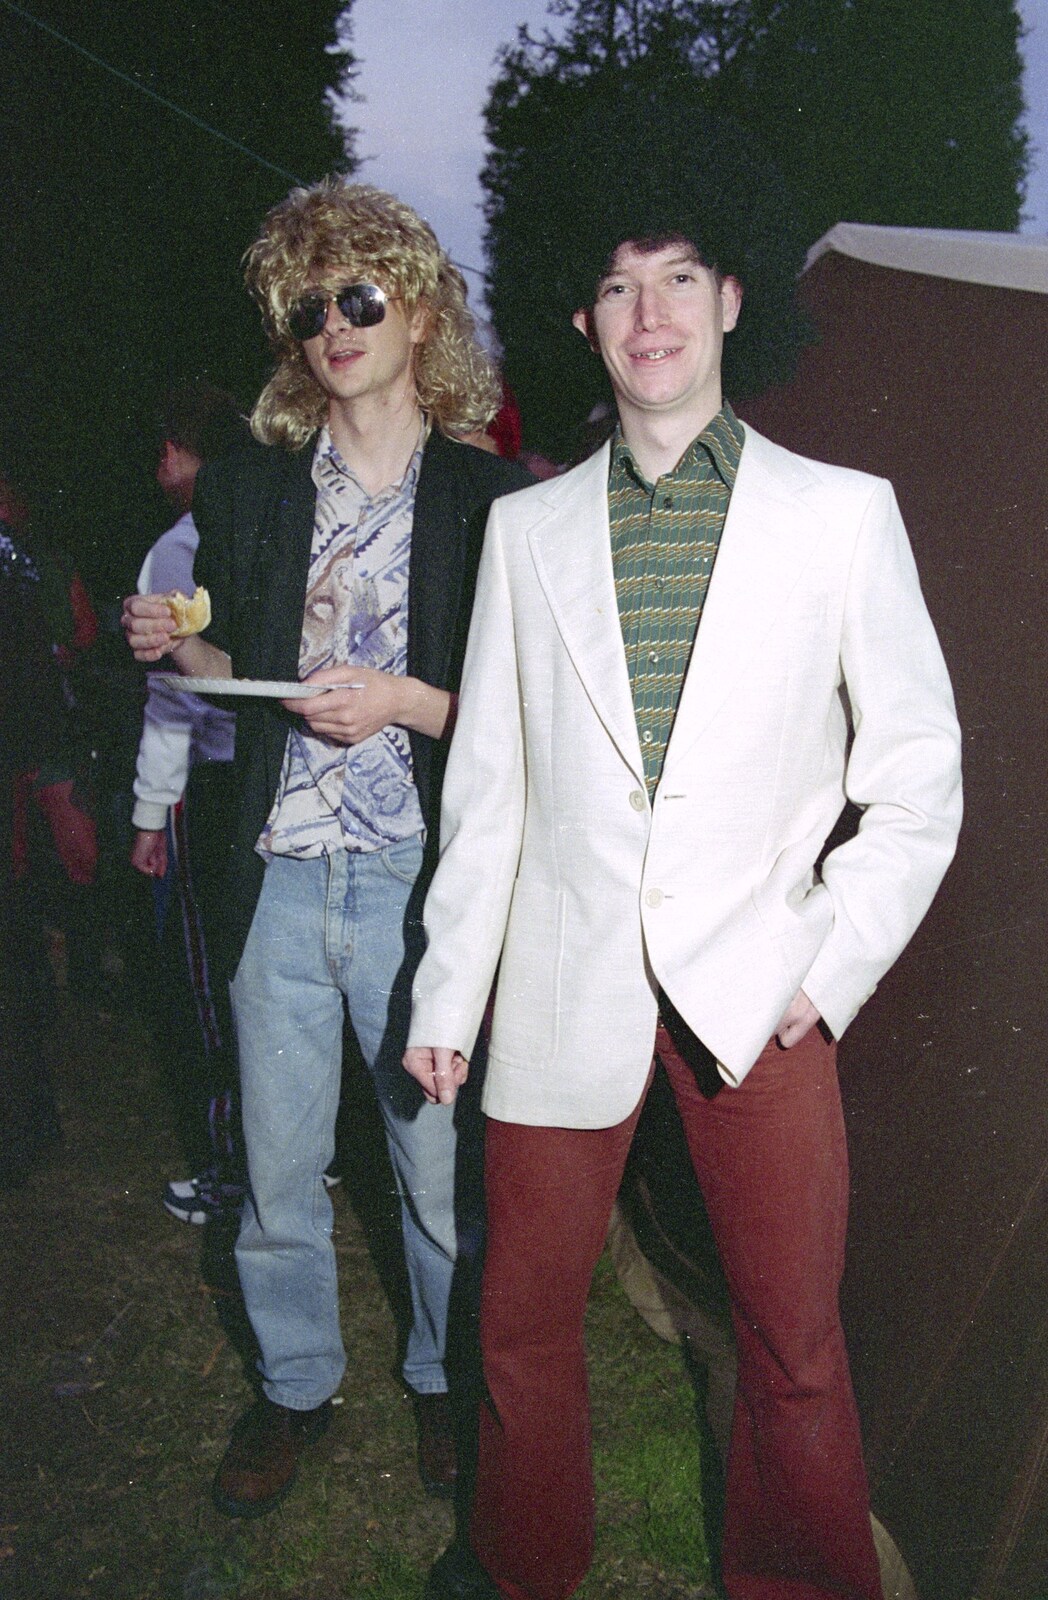 Andrew and Paul from "Dave's" CISU Fancy Dress Party, Finbar's Walk, Ipswich - 15th September 1999